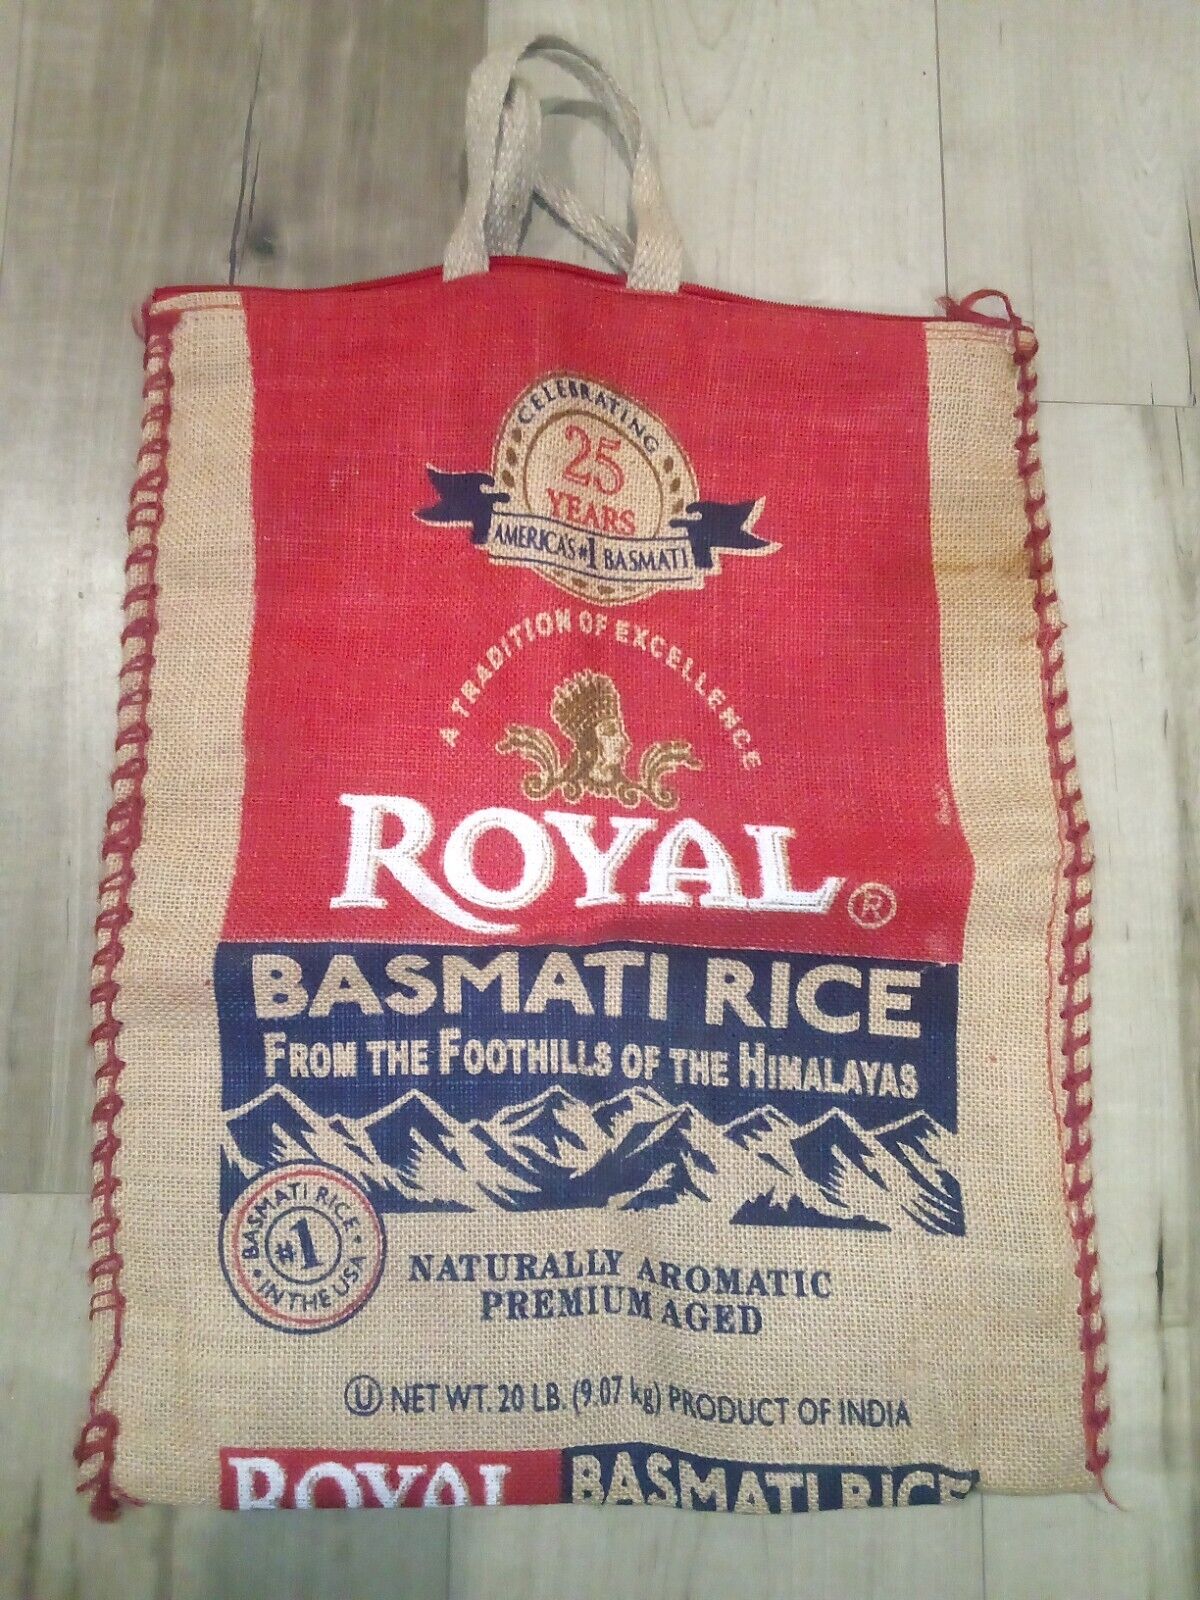 Royal Basmati Rice 25 years Burlap Sack Bag Zippered Top With Handles Empty Used